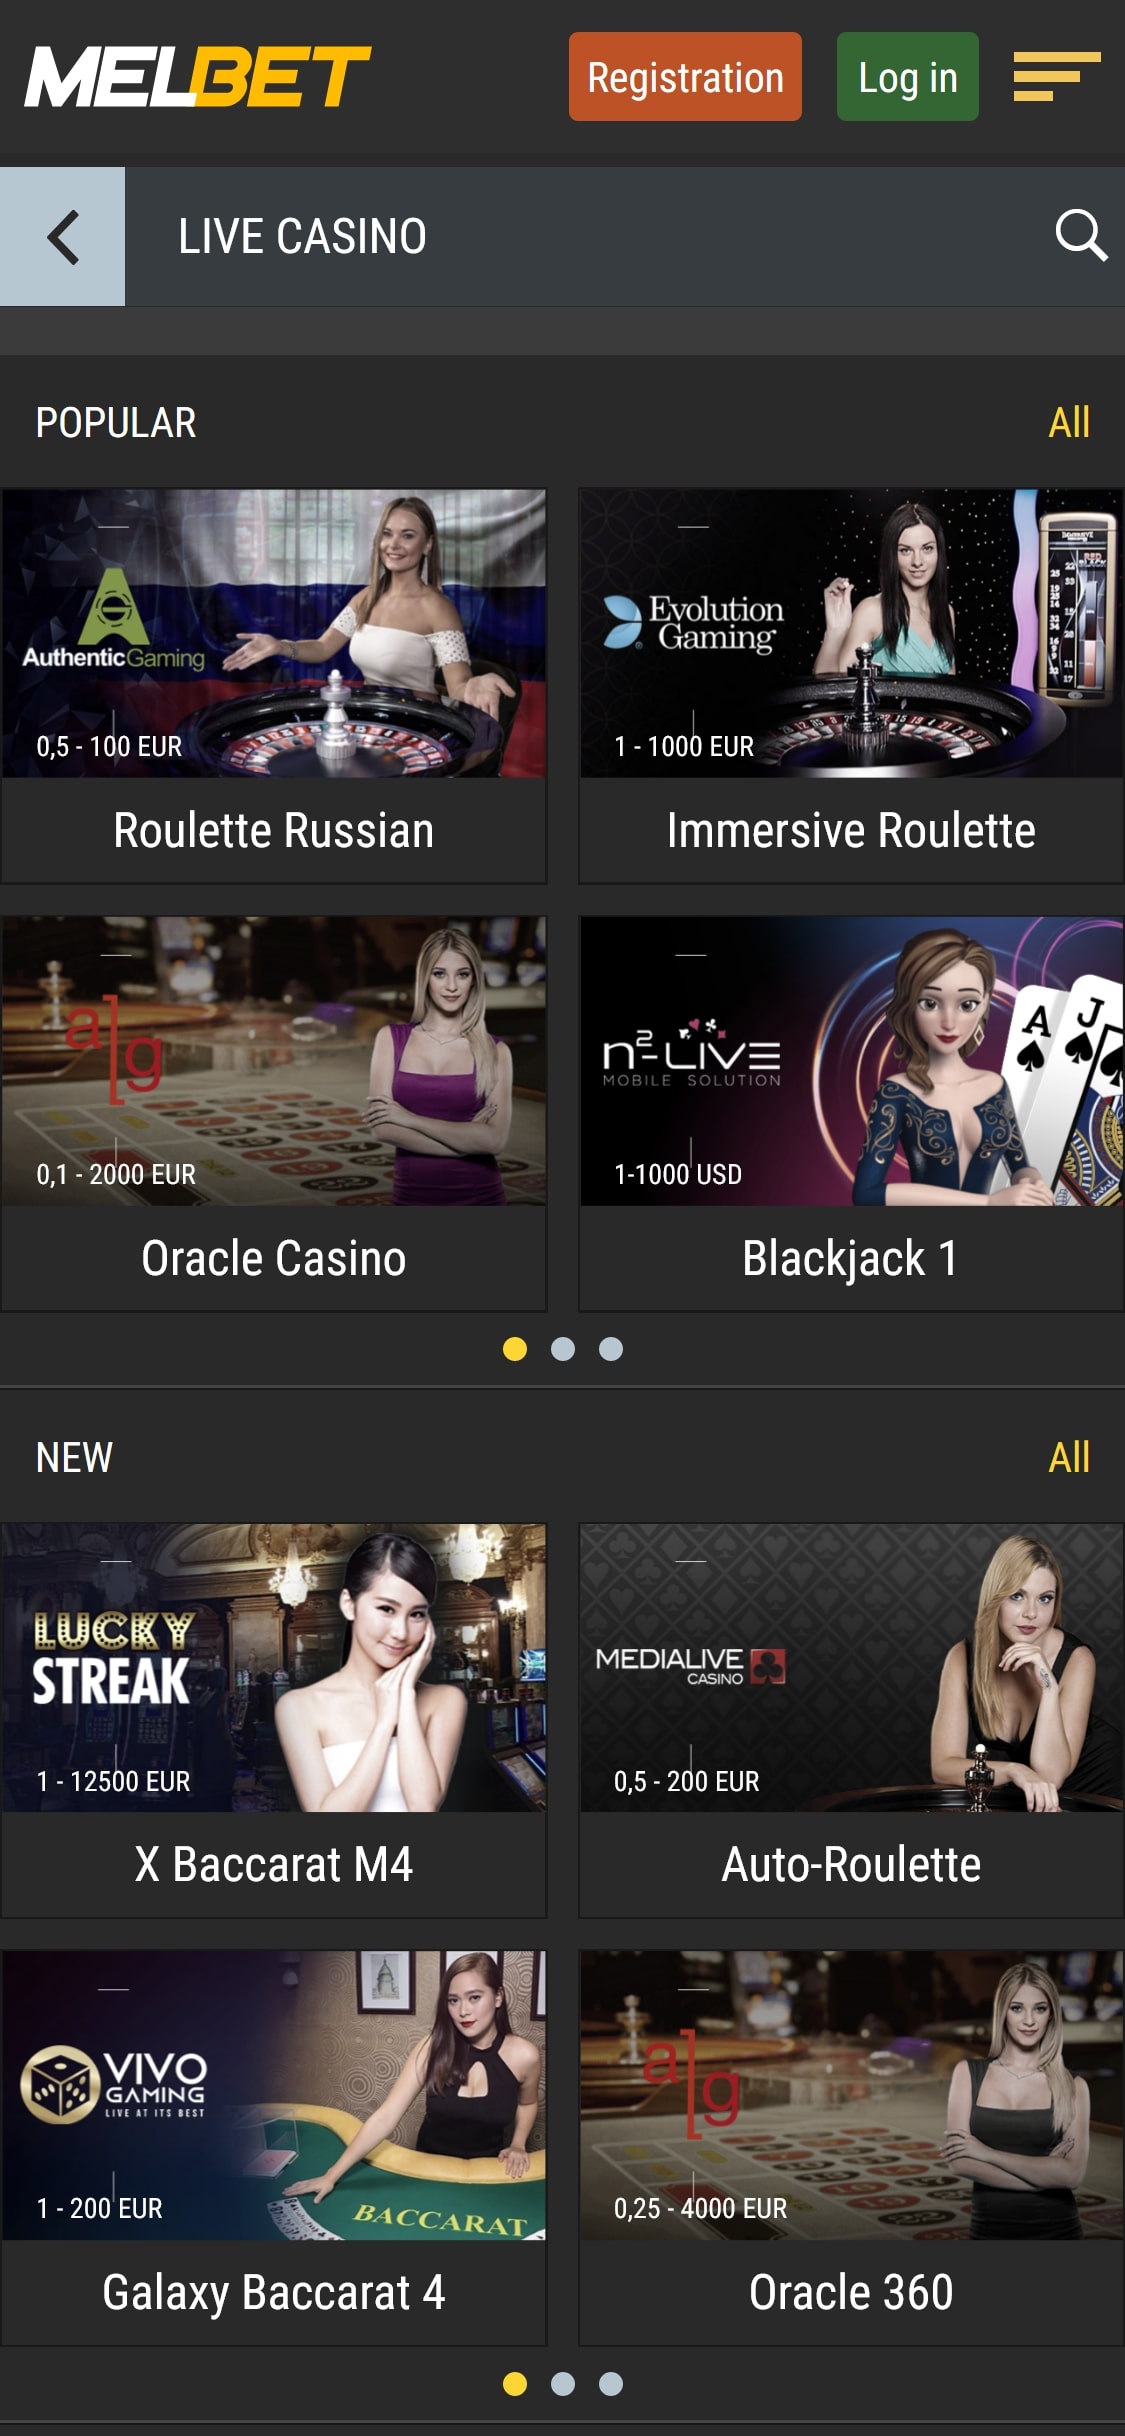 Melbet Casino Mobile Live Dealer Games Review